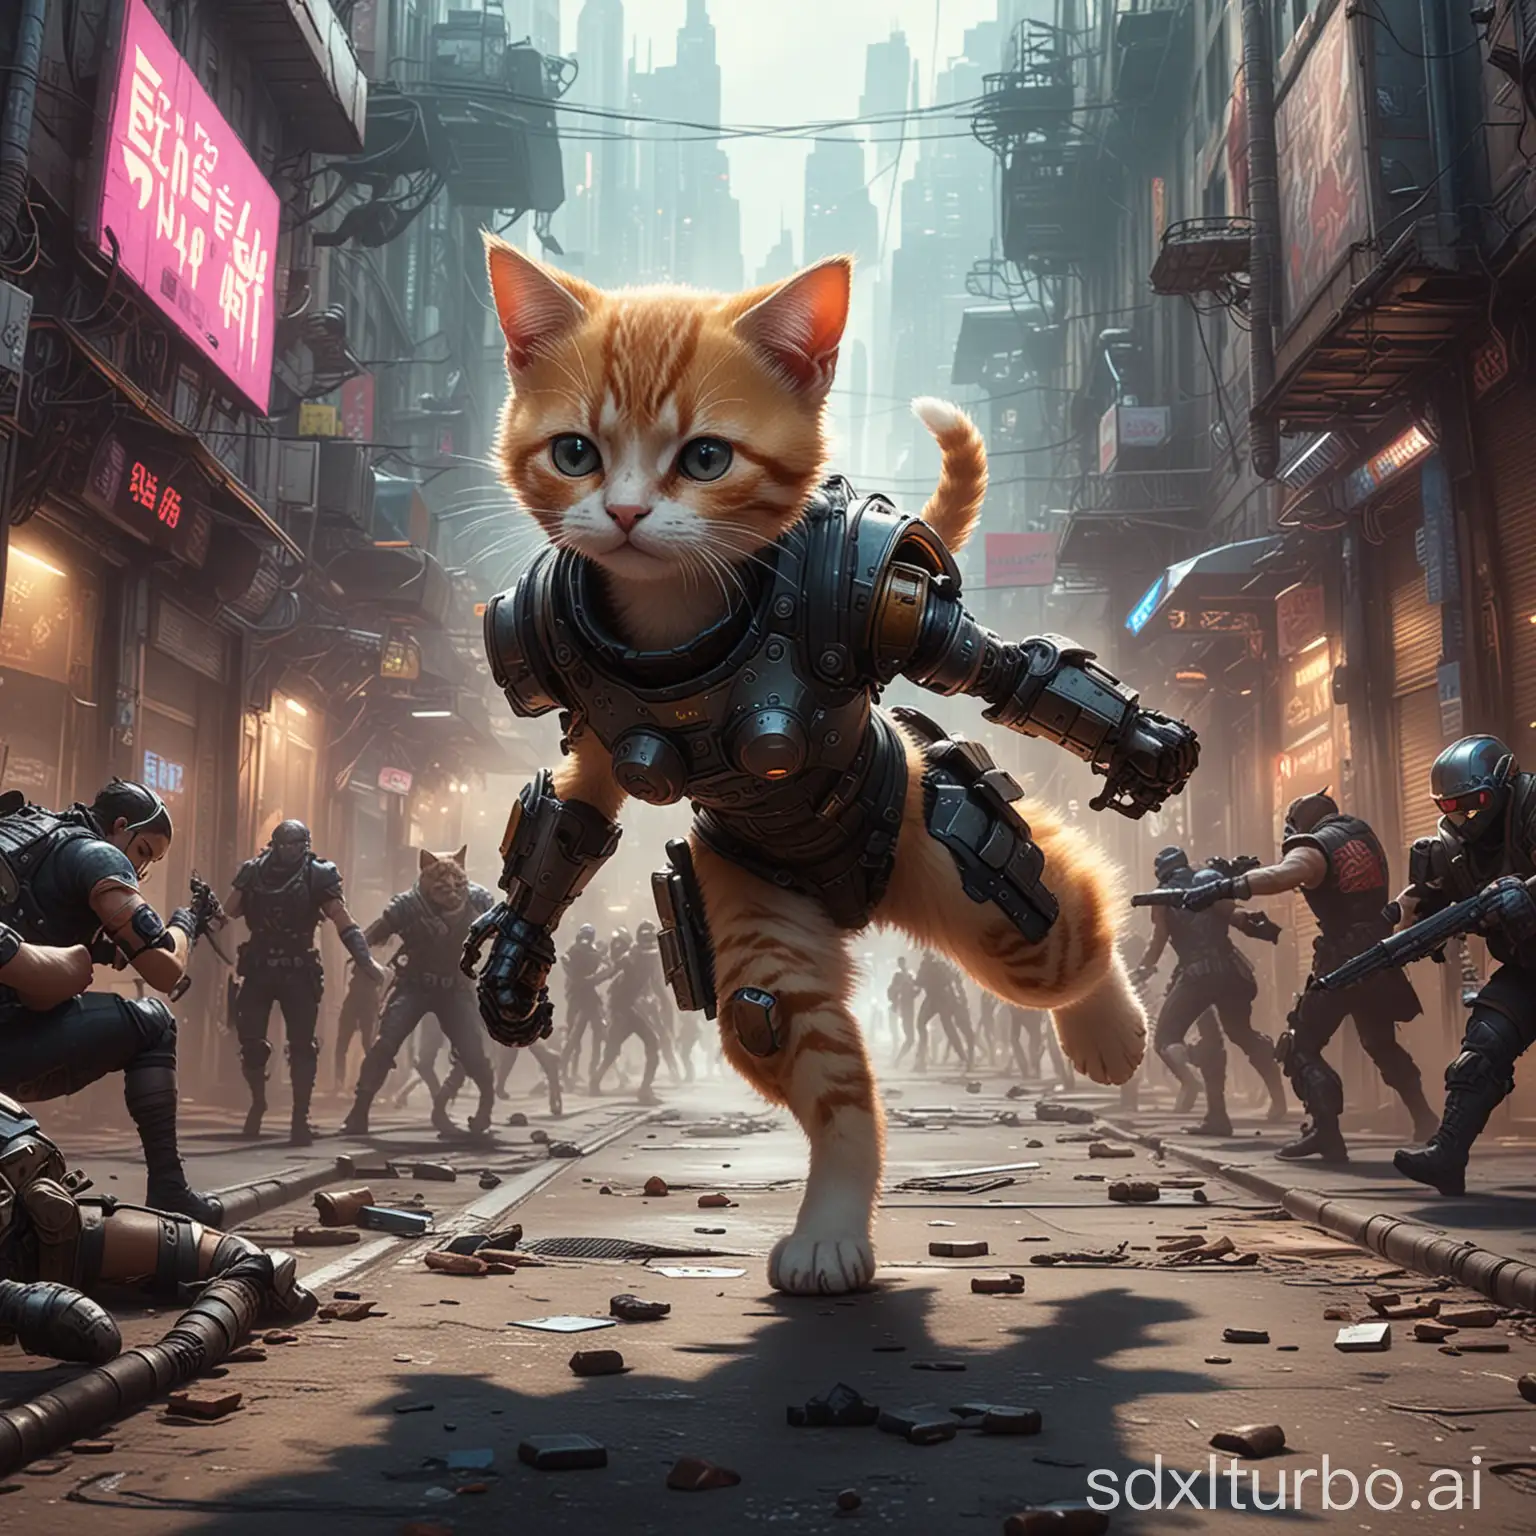 Cyberpunk-Street-Kittens-Engage-in-Mechanical-Brawls